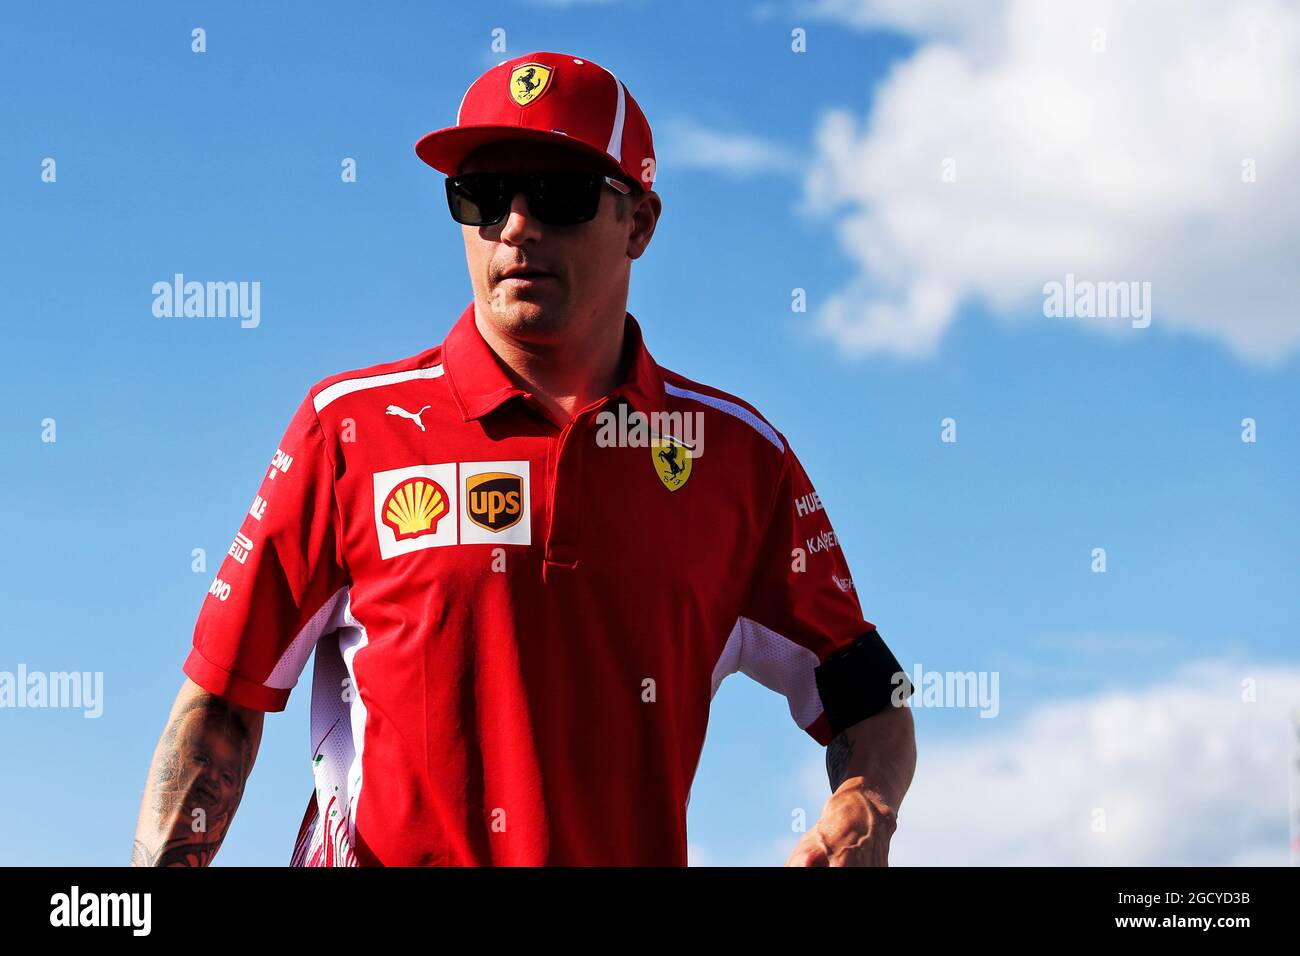 Kimi Raikkonen (FIN) Ferrari. Gran Premio de Hungría, jueves 26th de julio de 2018. Budapest, Hungría. Foto de stock